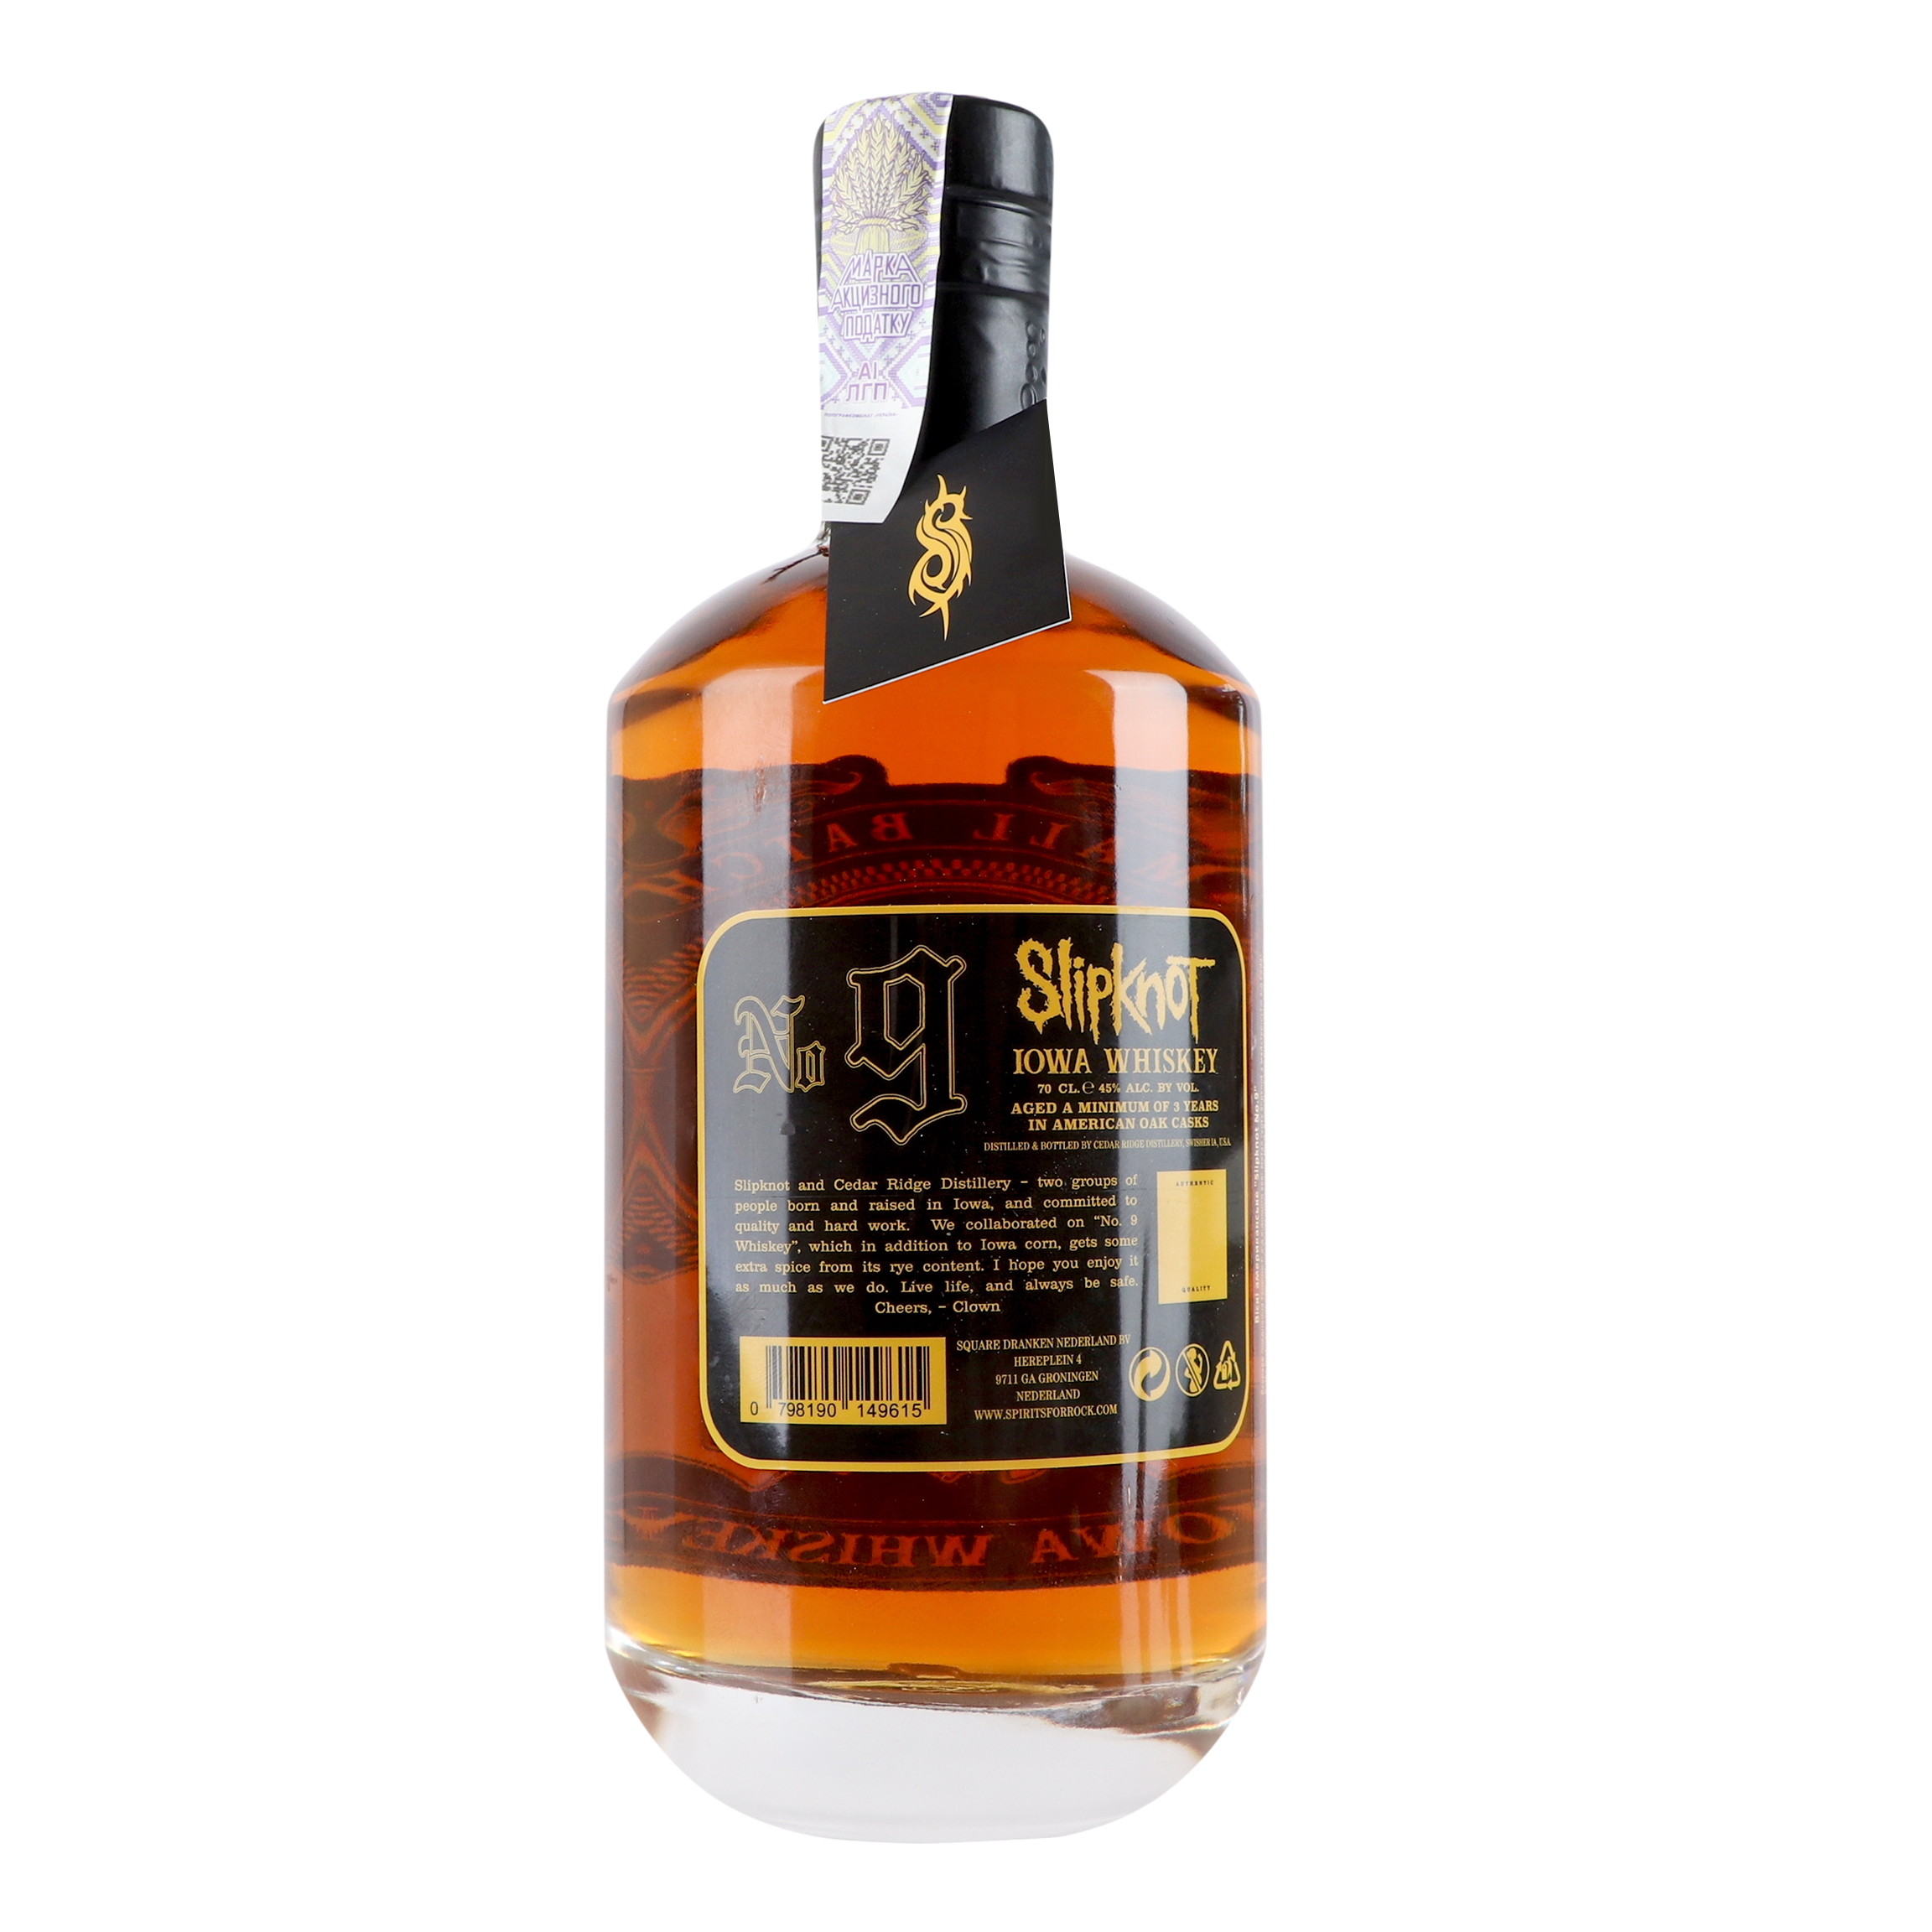 Виски Slipknot №9 Iowa Whiskey 45% 0.7 л - фото 2